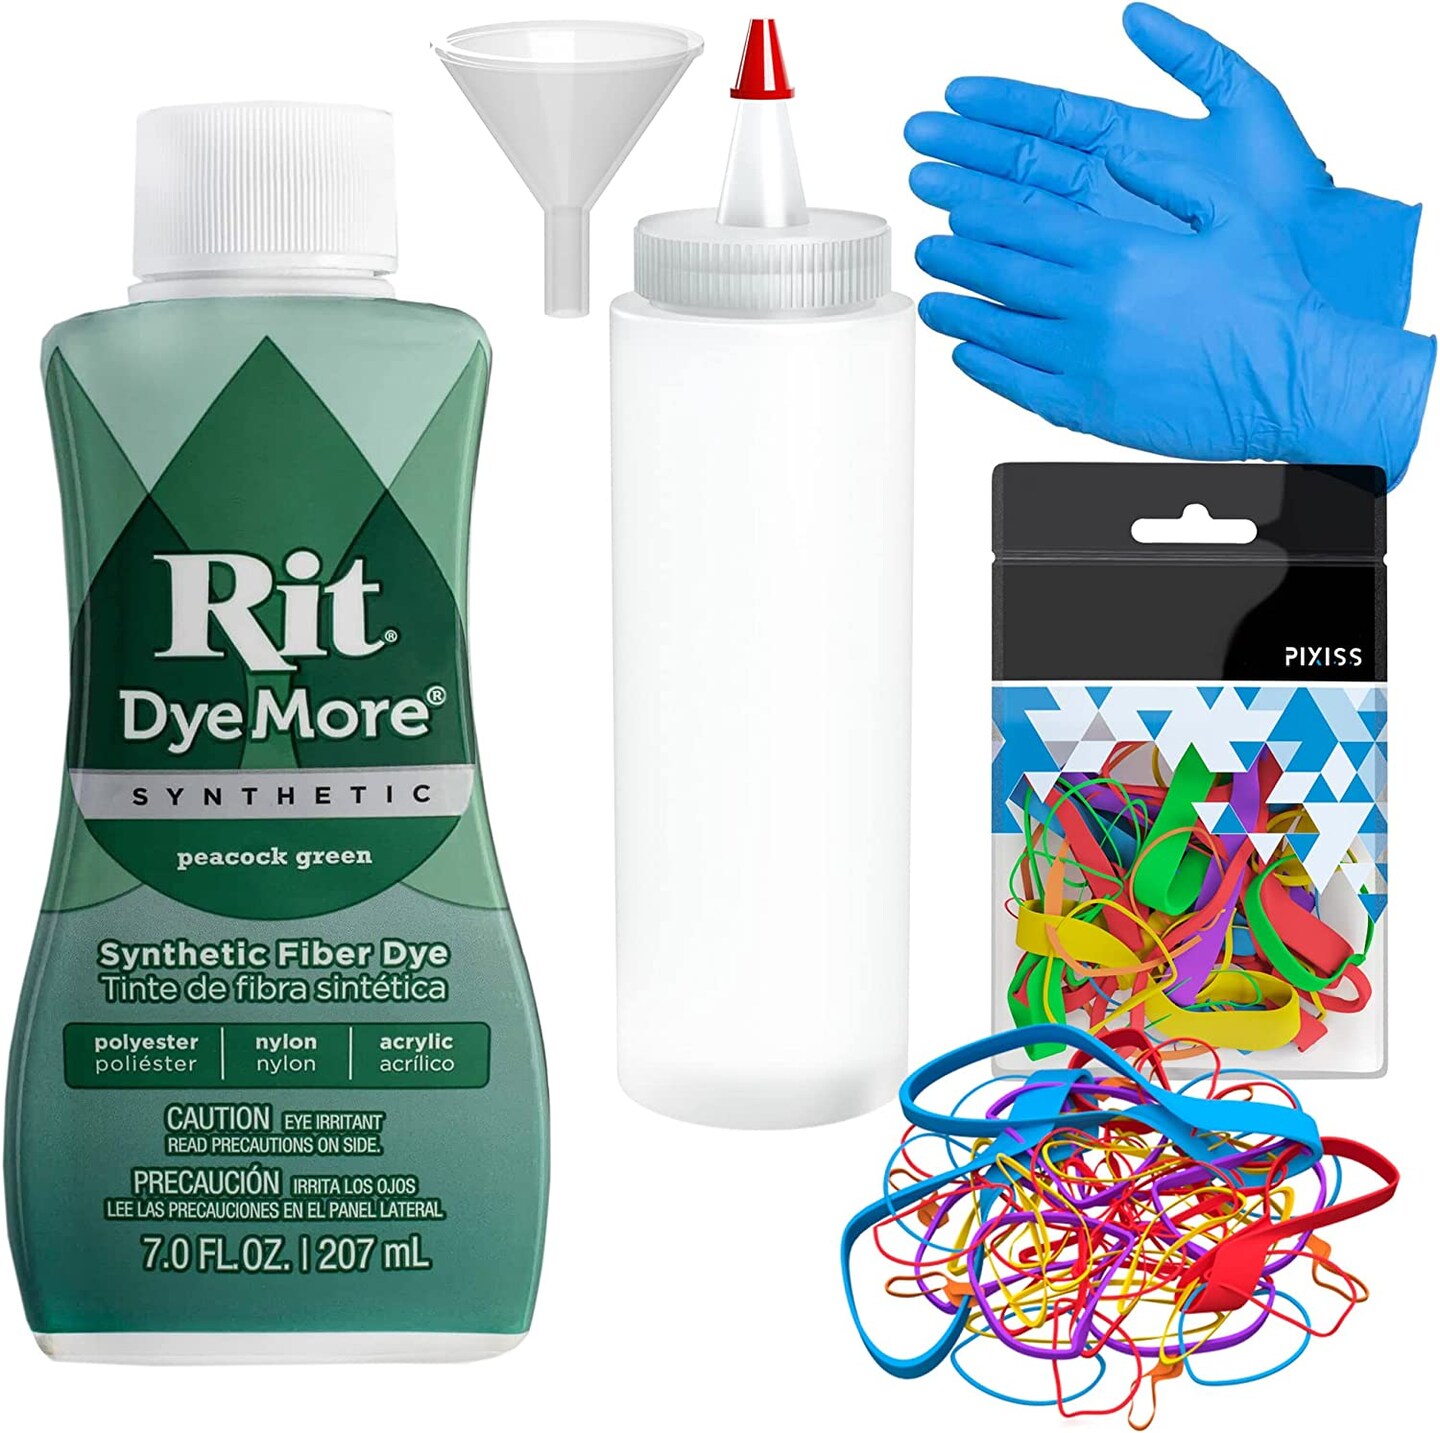 Rit DyeMore Synthetic Fiber Dye, Peacock Green - 7.0 fl oz